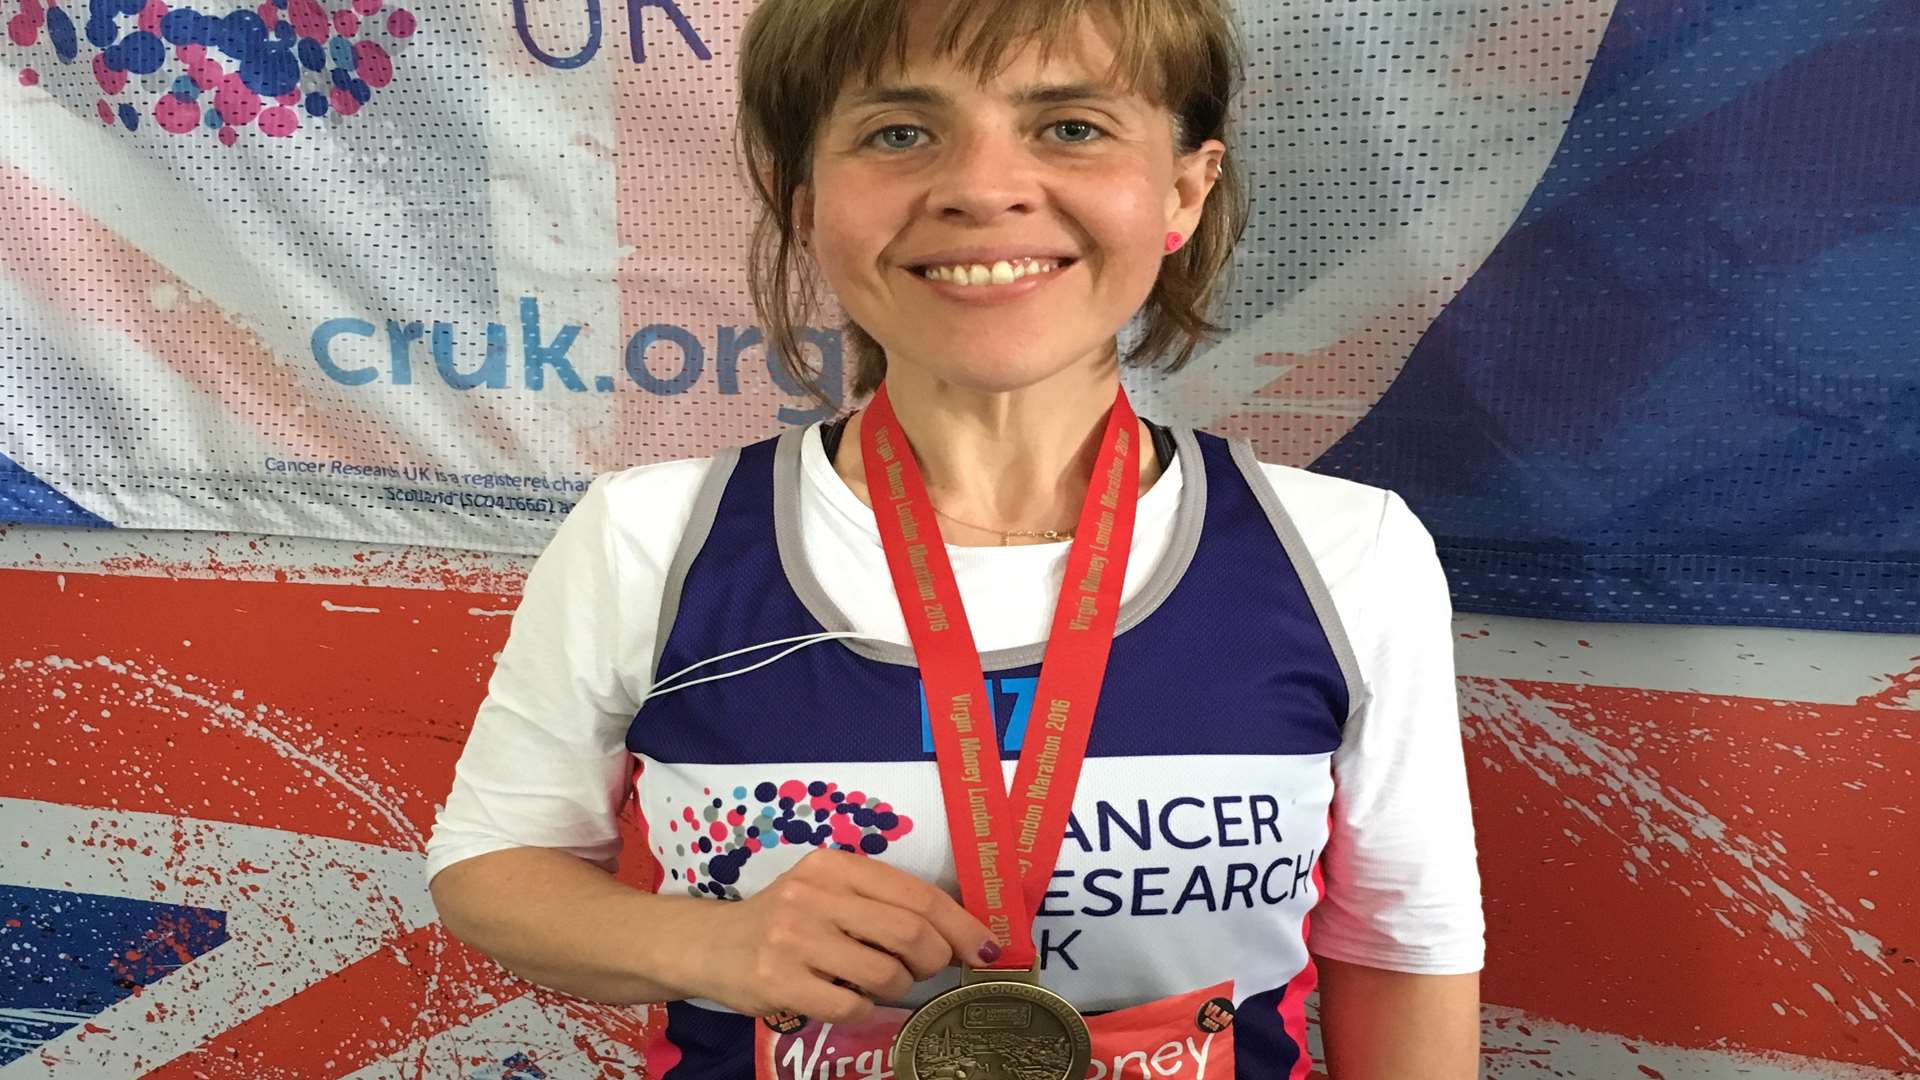 Liz Hiscutt, in the Slimming World team, ran this year's Virgin Money London Marathon for Cancer Research UK